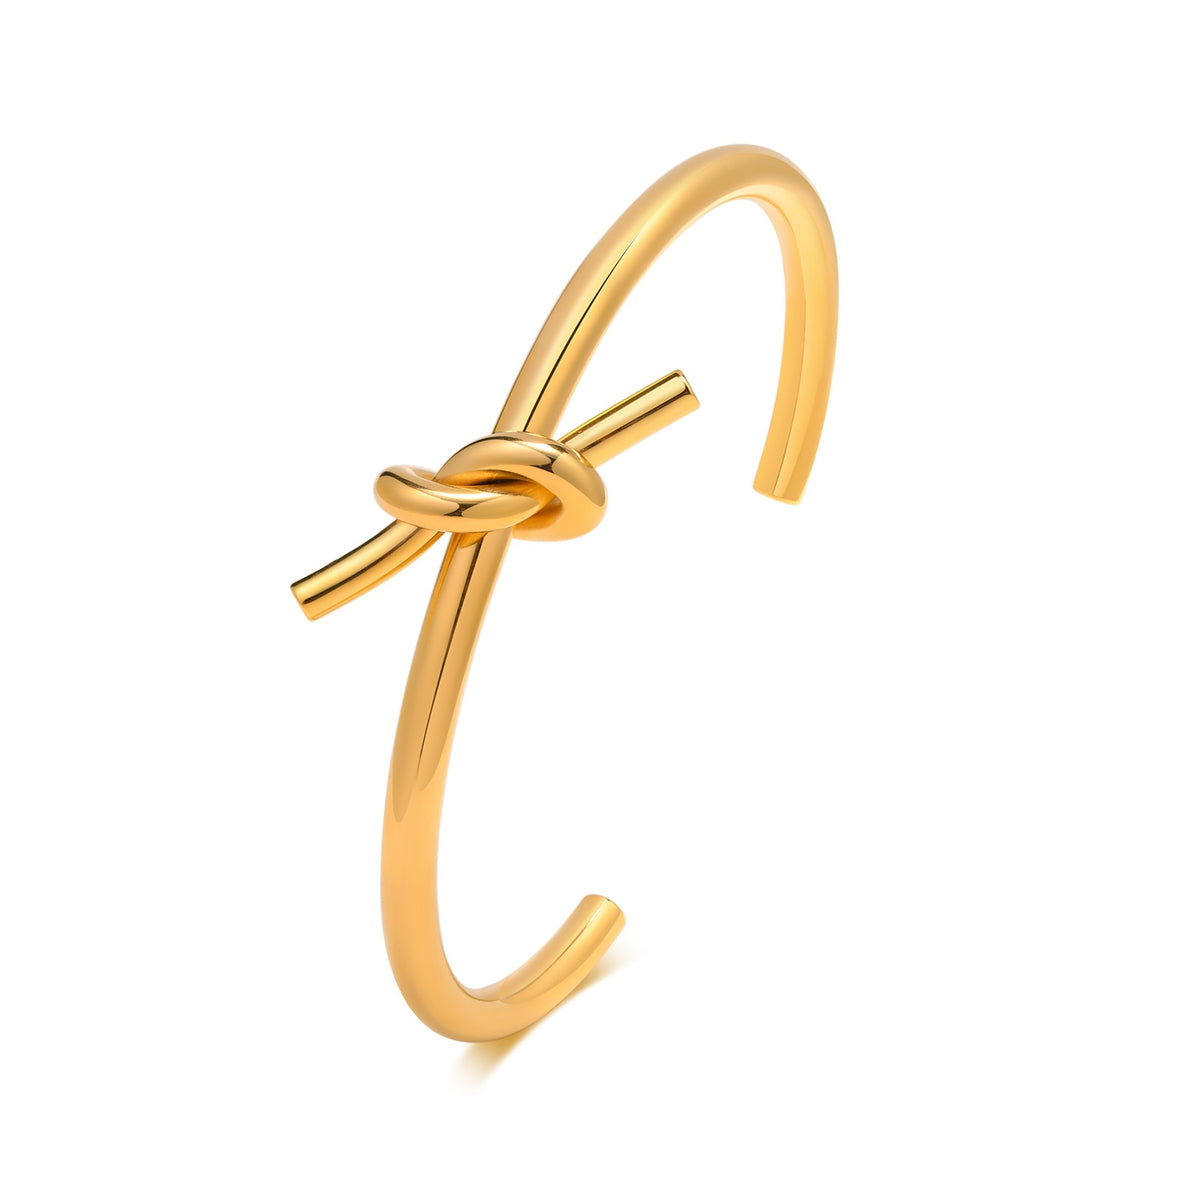 Runde kreisförmige offene Knoten-Stulpe-Armband-Armbänder für Frauen-eleganten Goldschmuck Noeud Armband Pulseiras